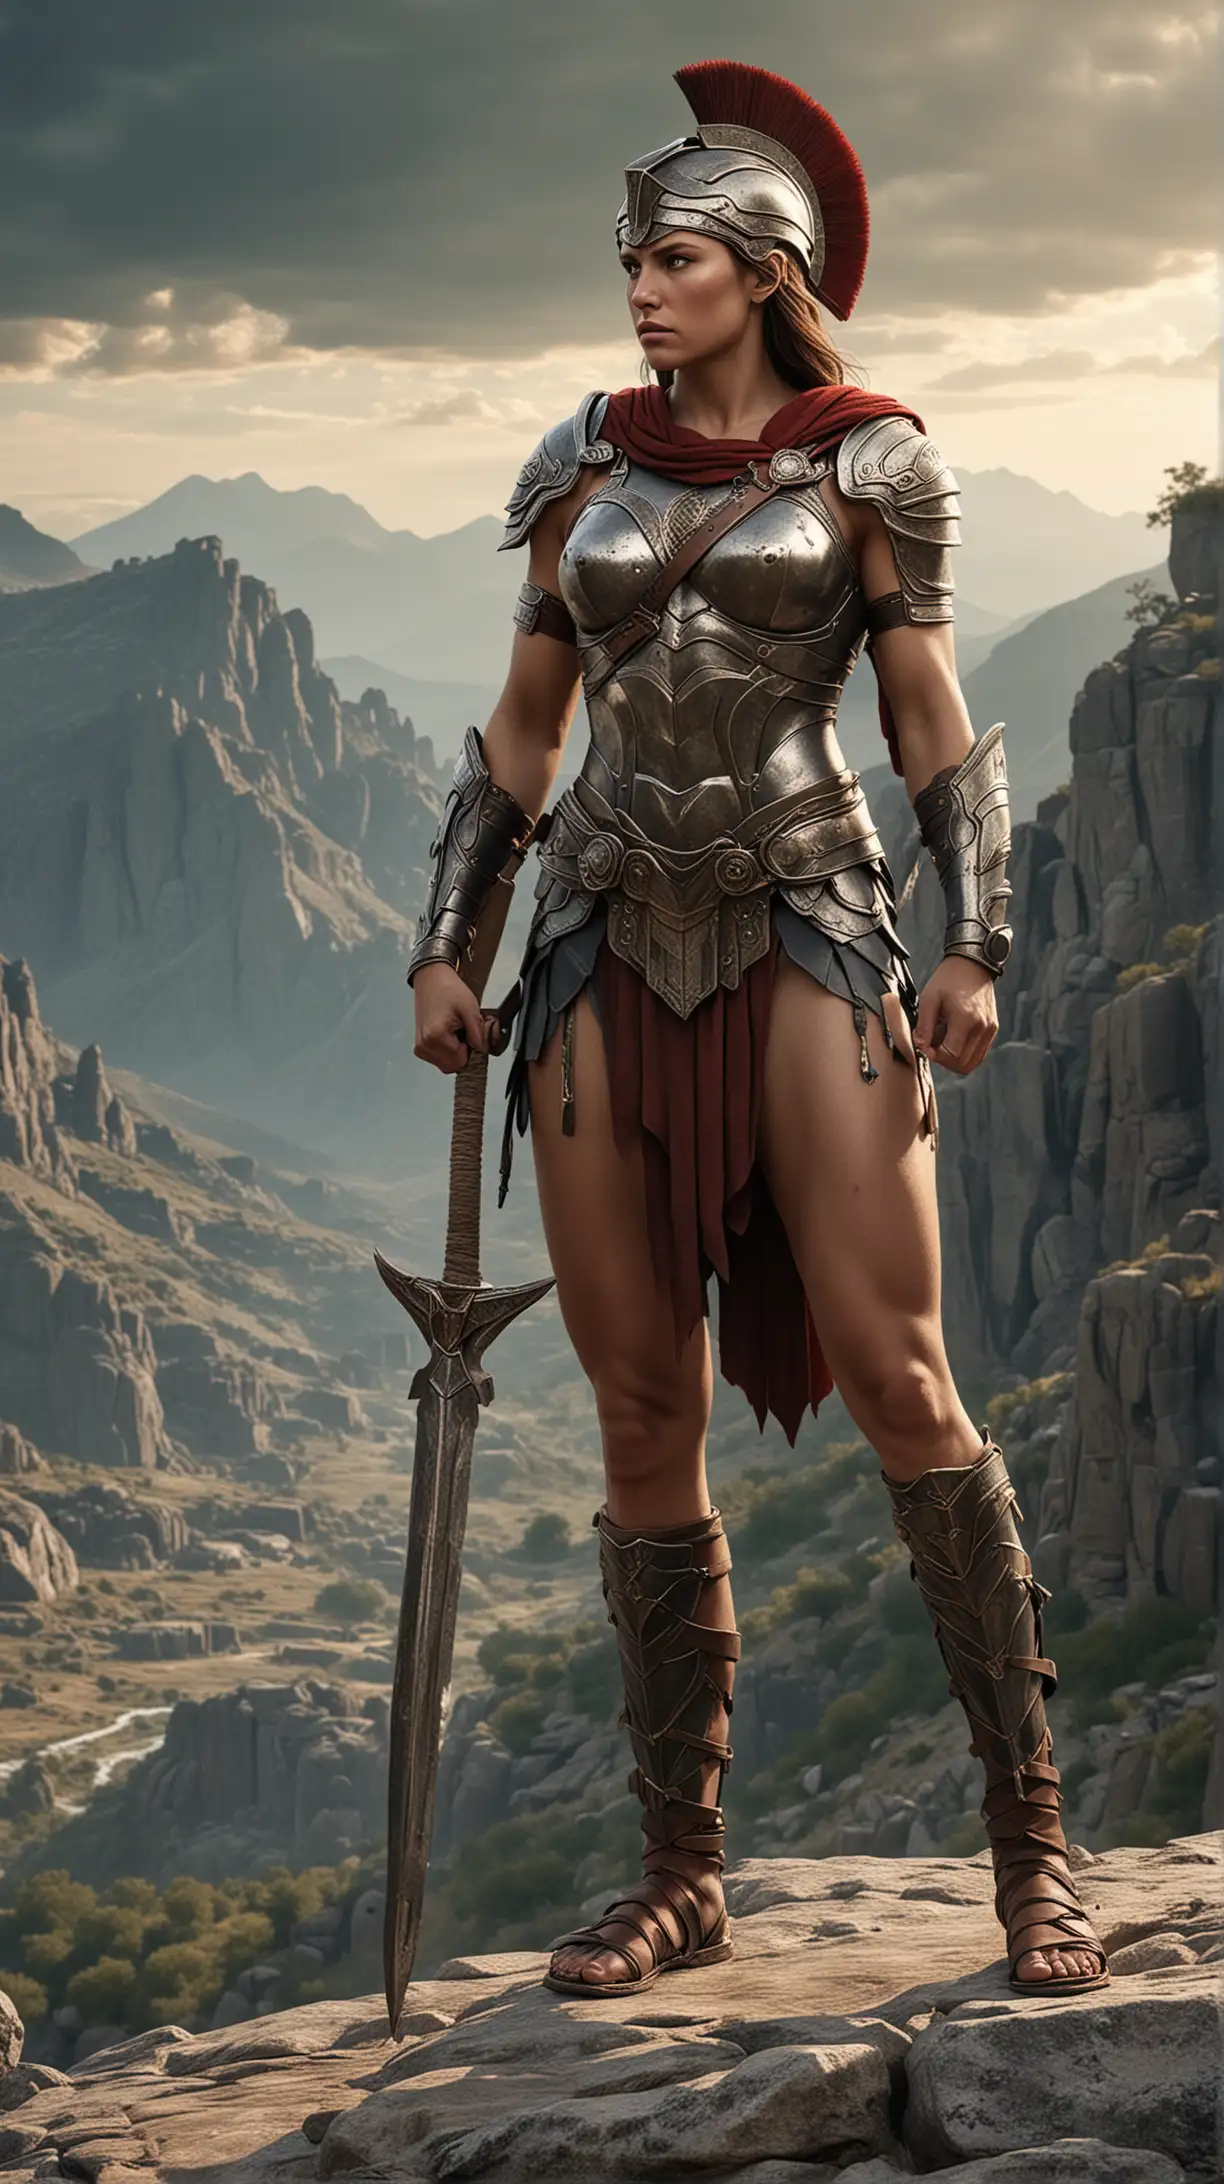 Fierce Spartan Woman Warrior Standing on Rocky Outcrop with Spear in HyperRealistic Mountain Landscape